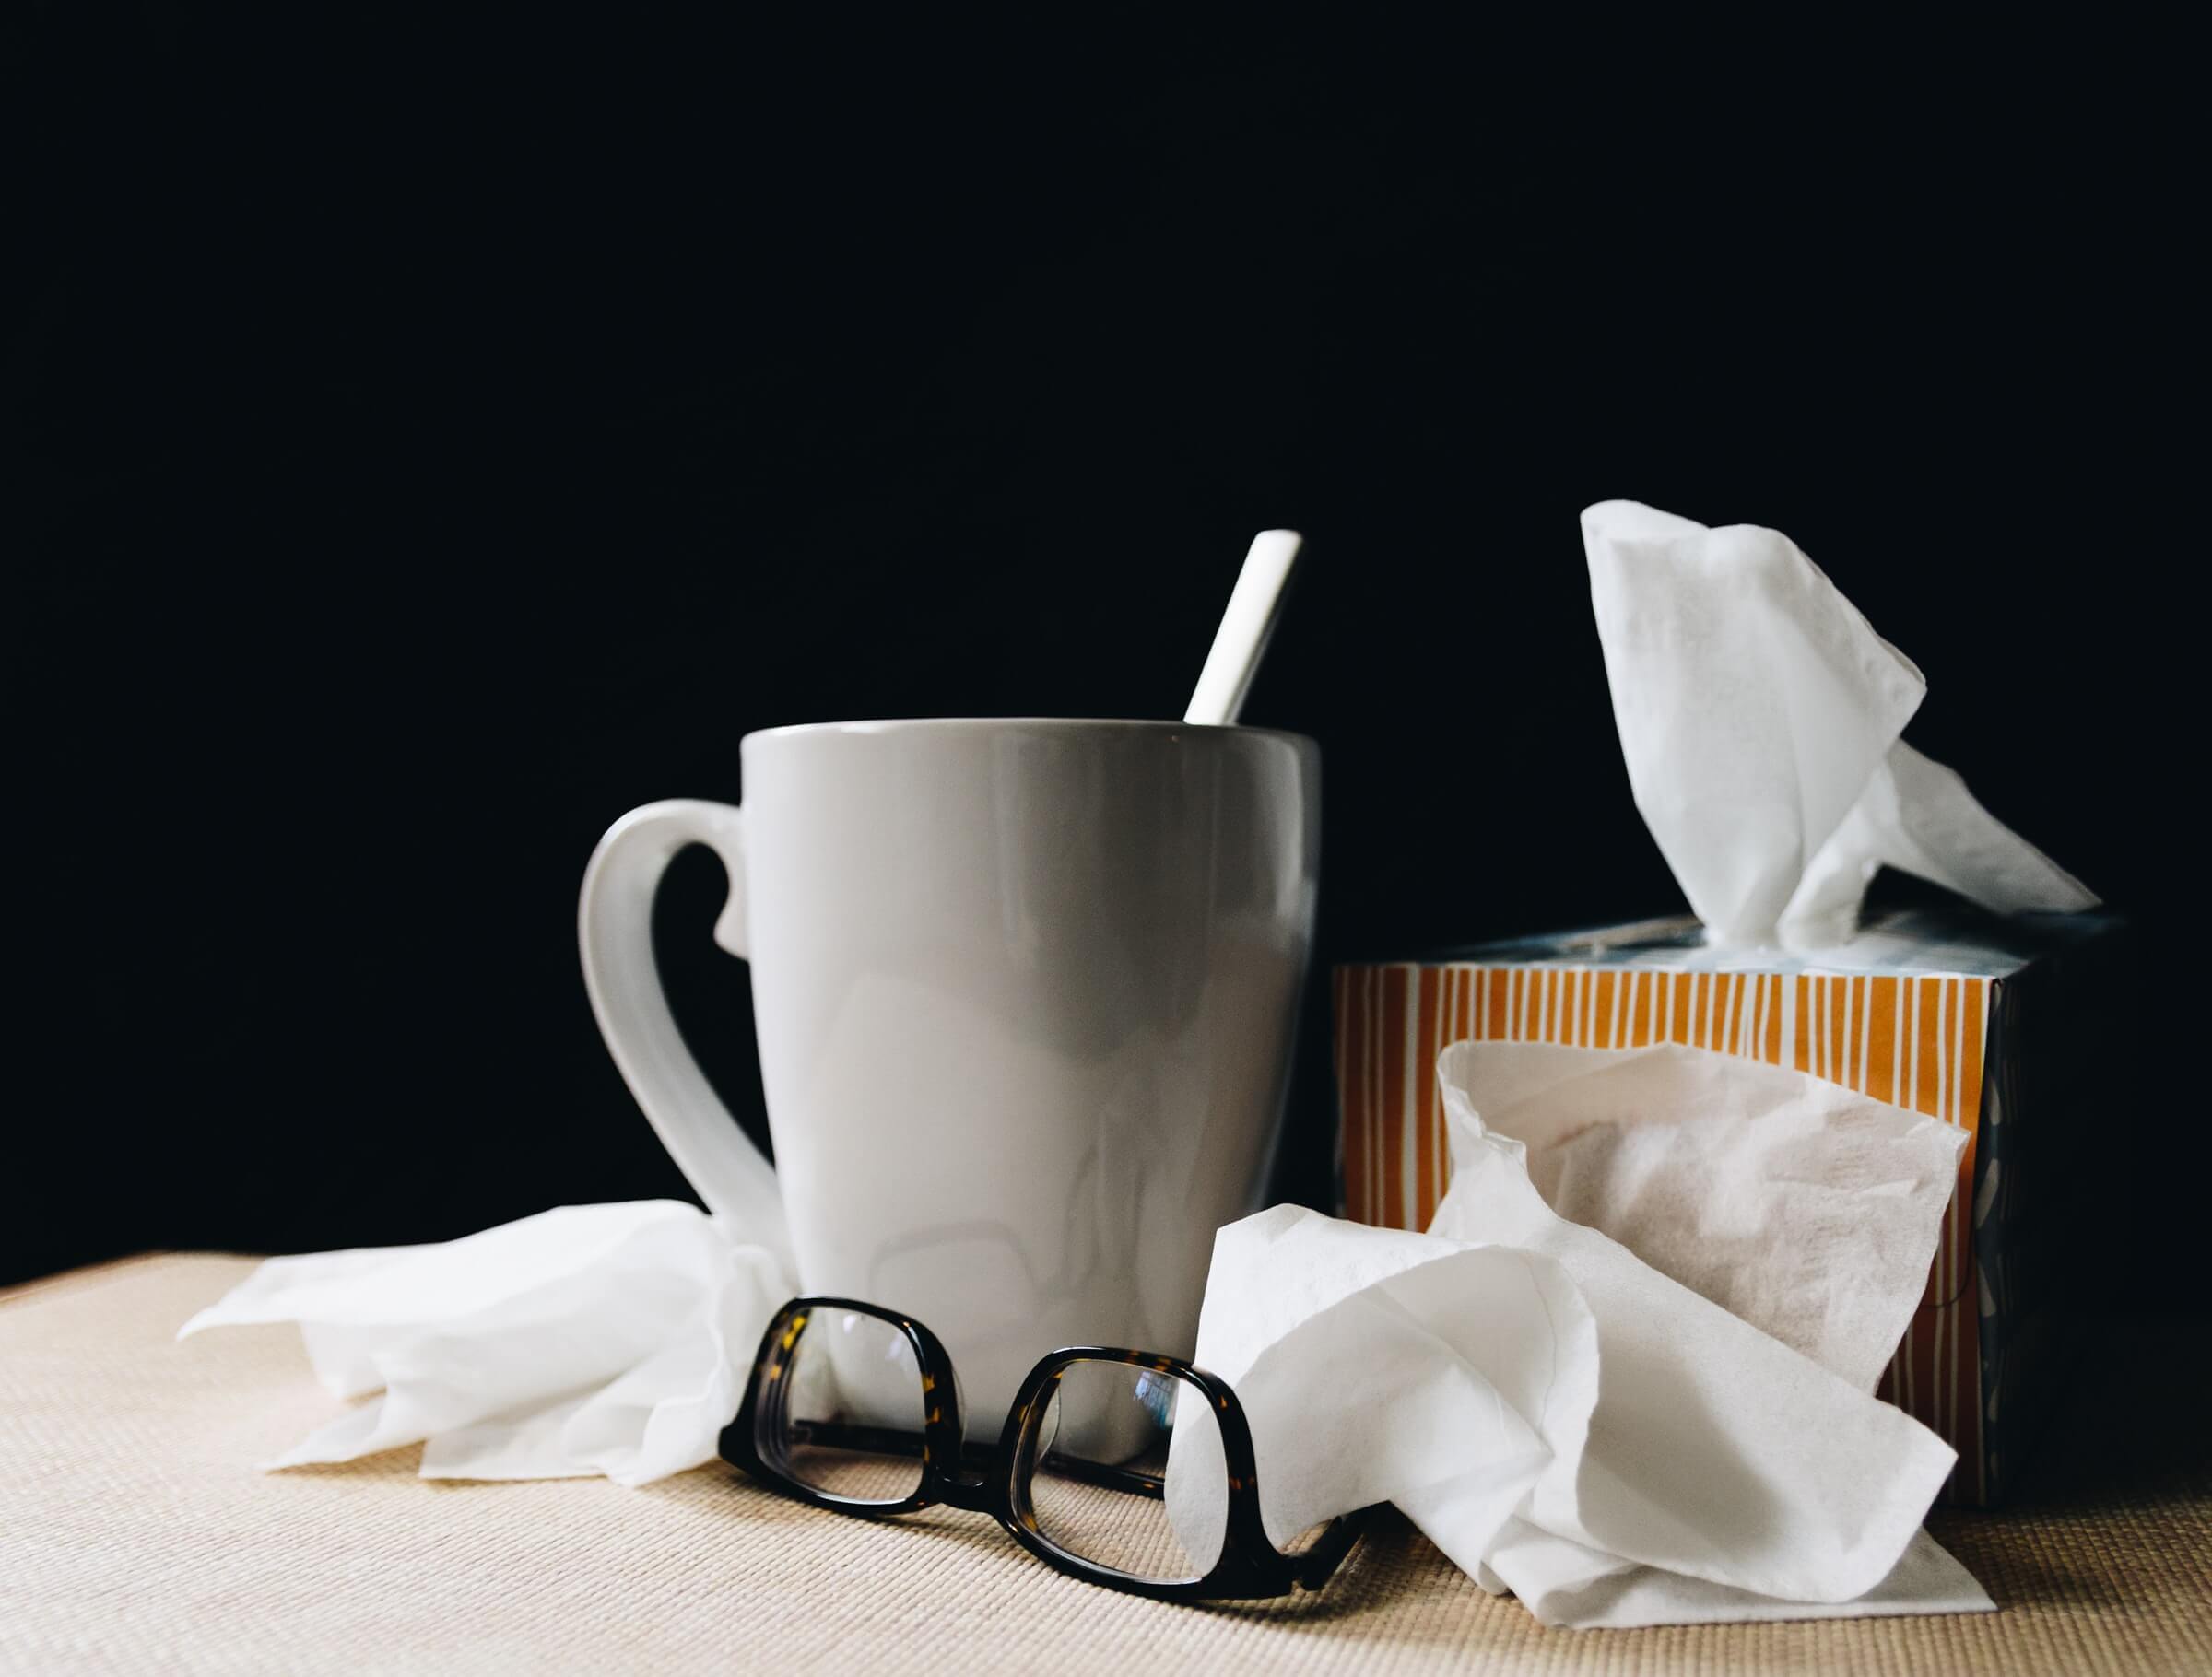 tissues, mug and glasses on table for allergy relief benadryl alternative